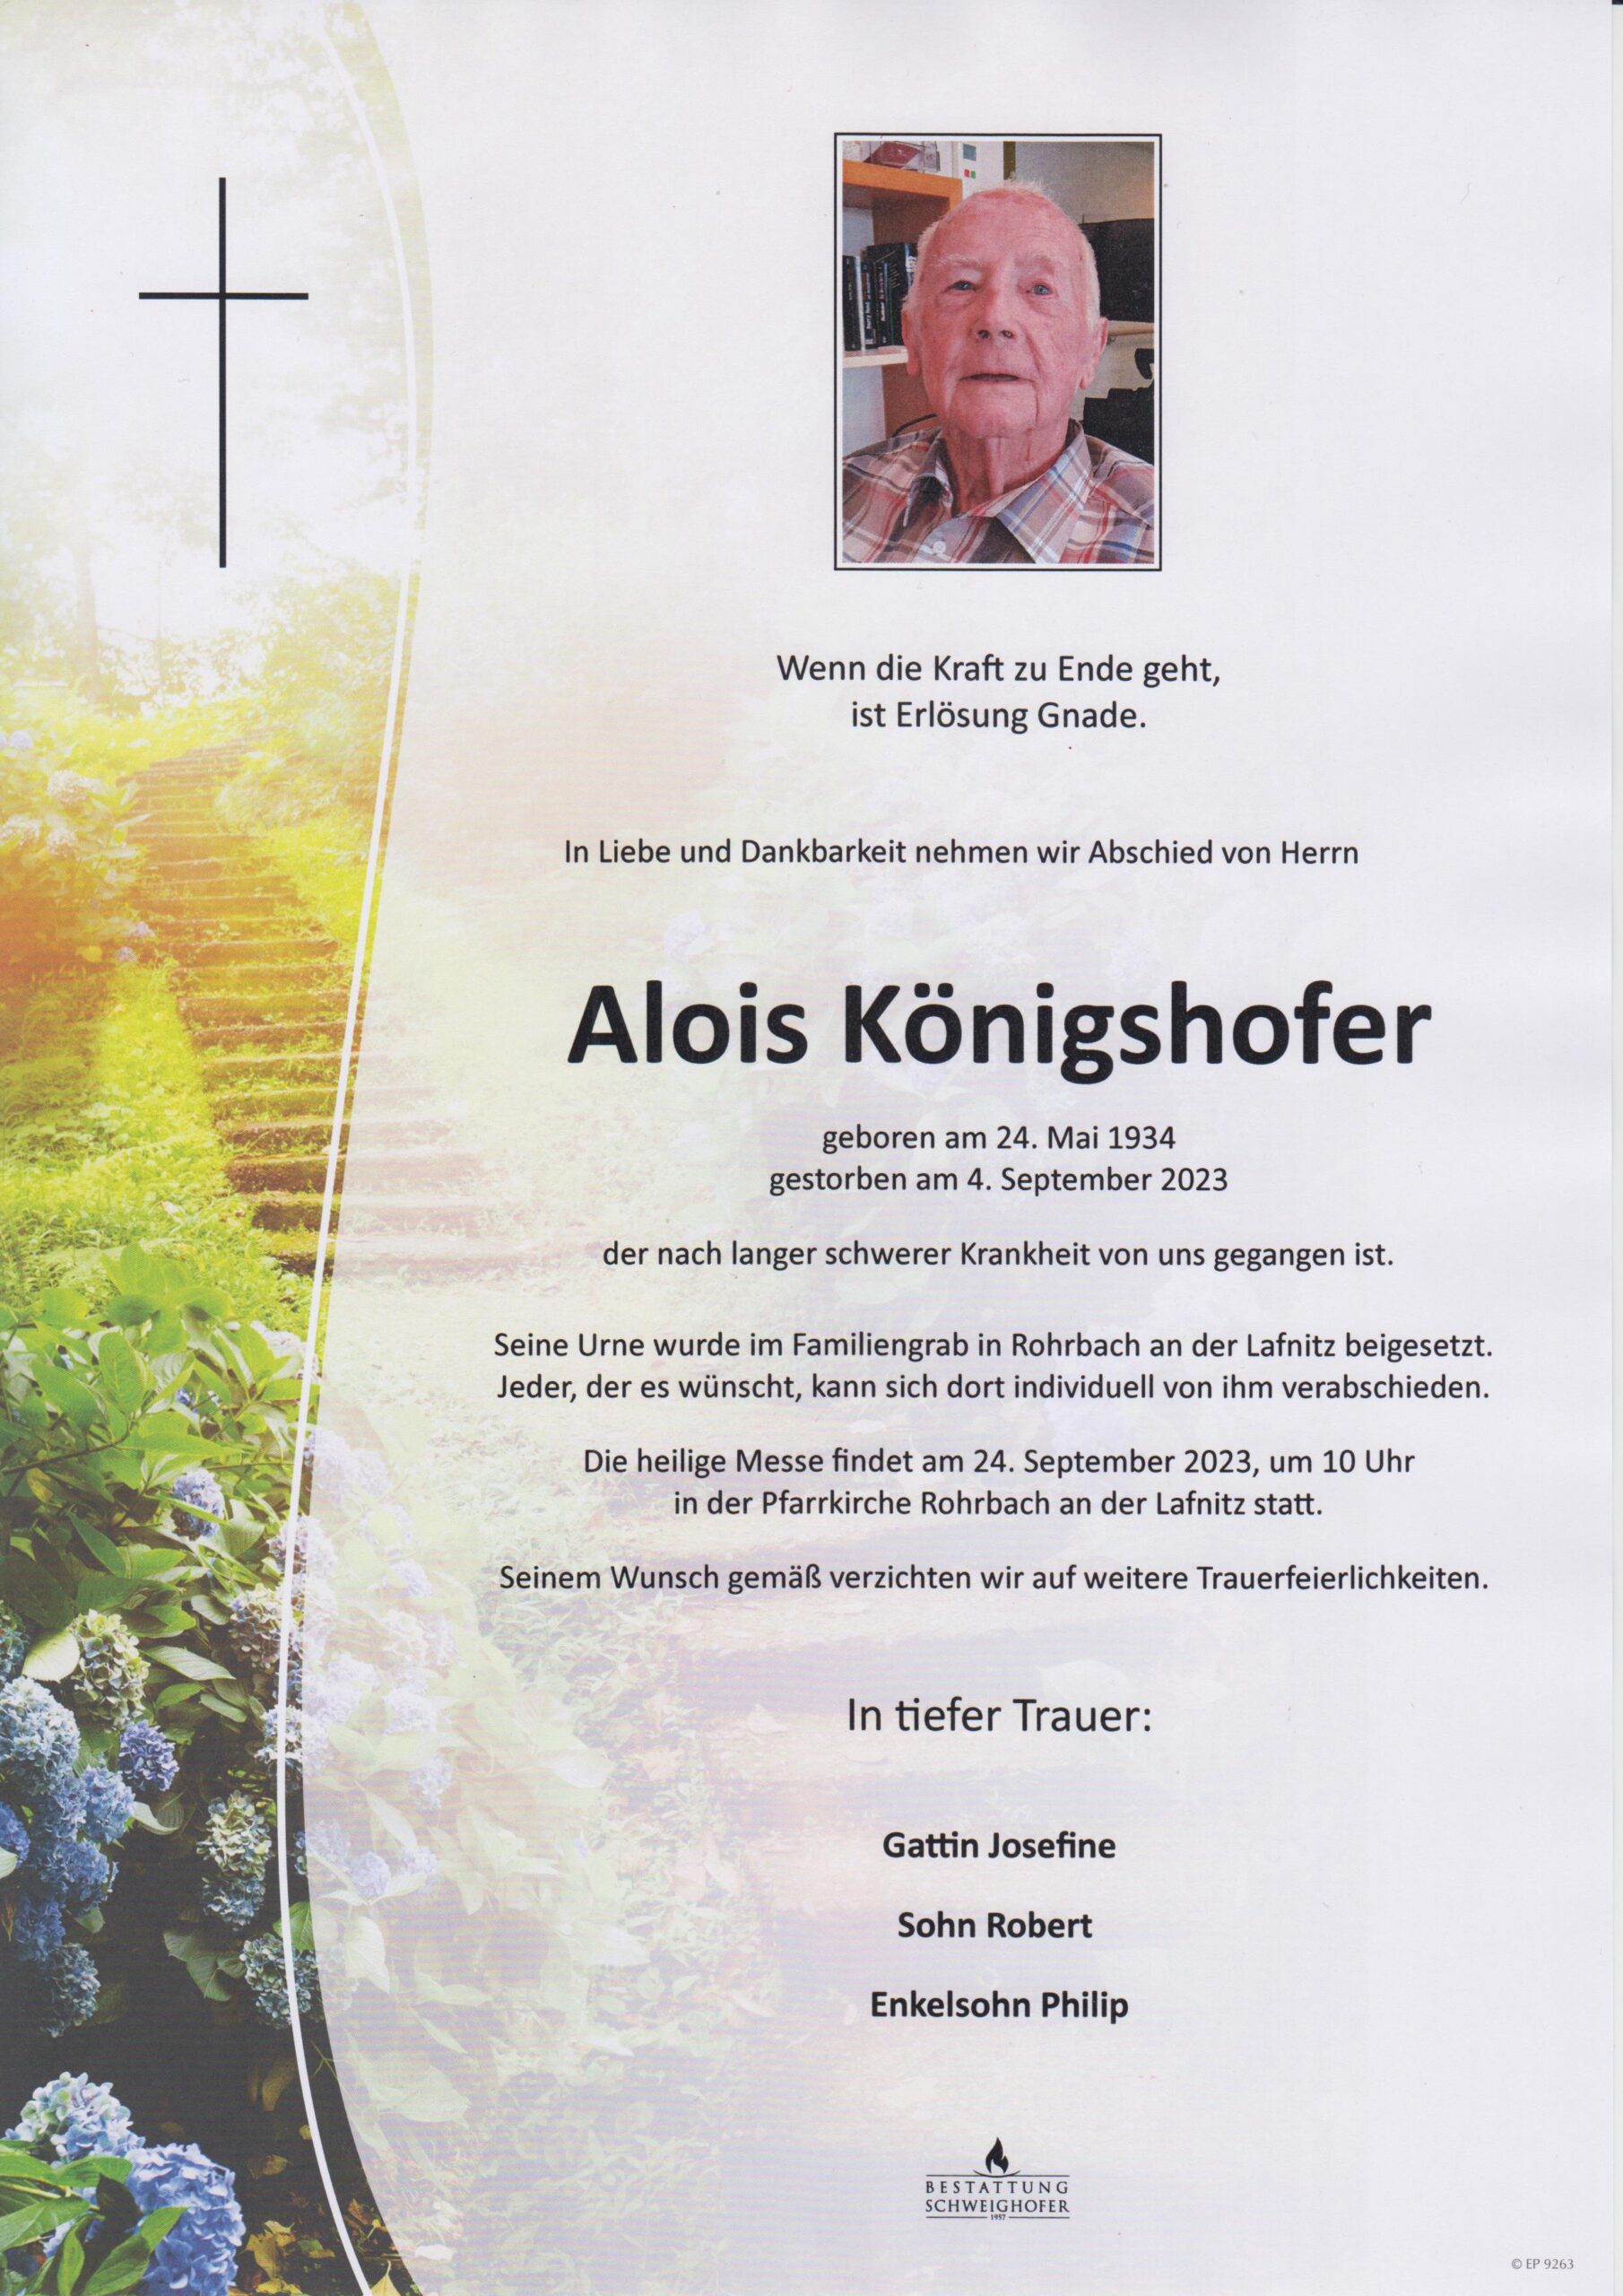 Alois Königshofer